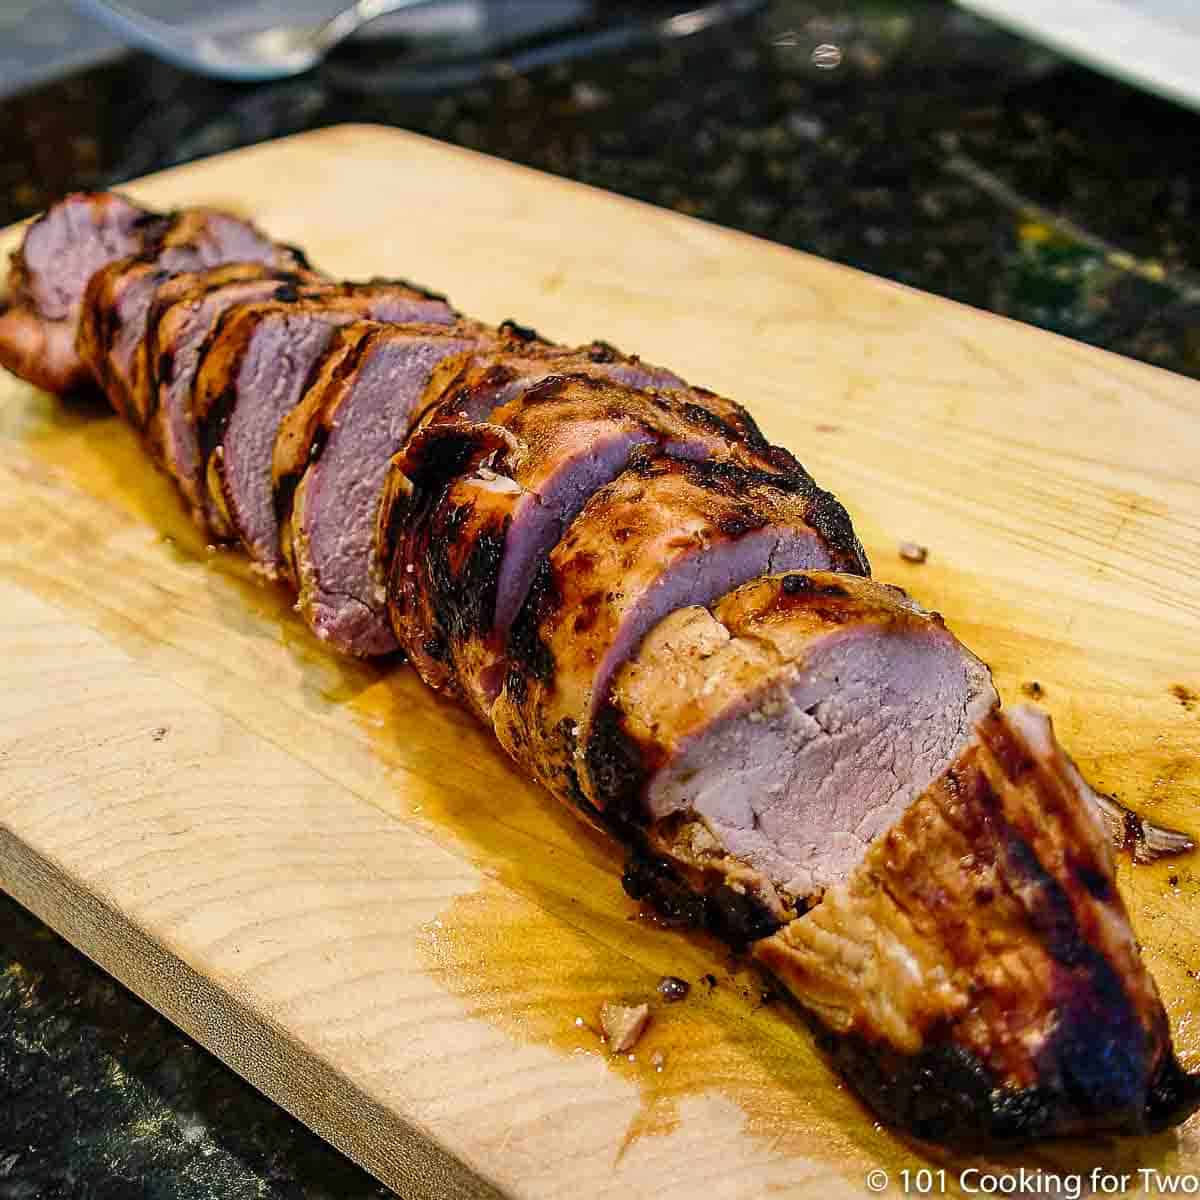 sliced pork tenderloin on a wooden board.